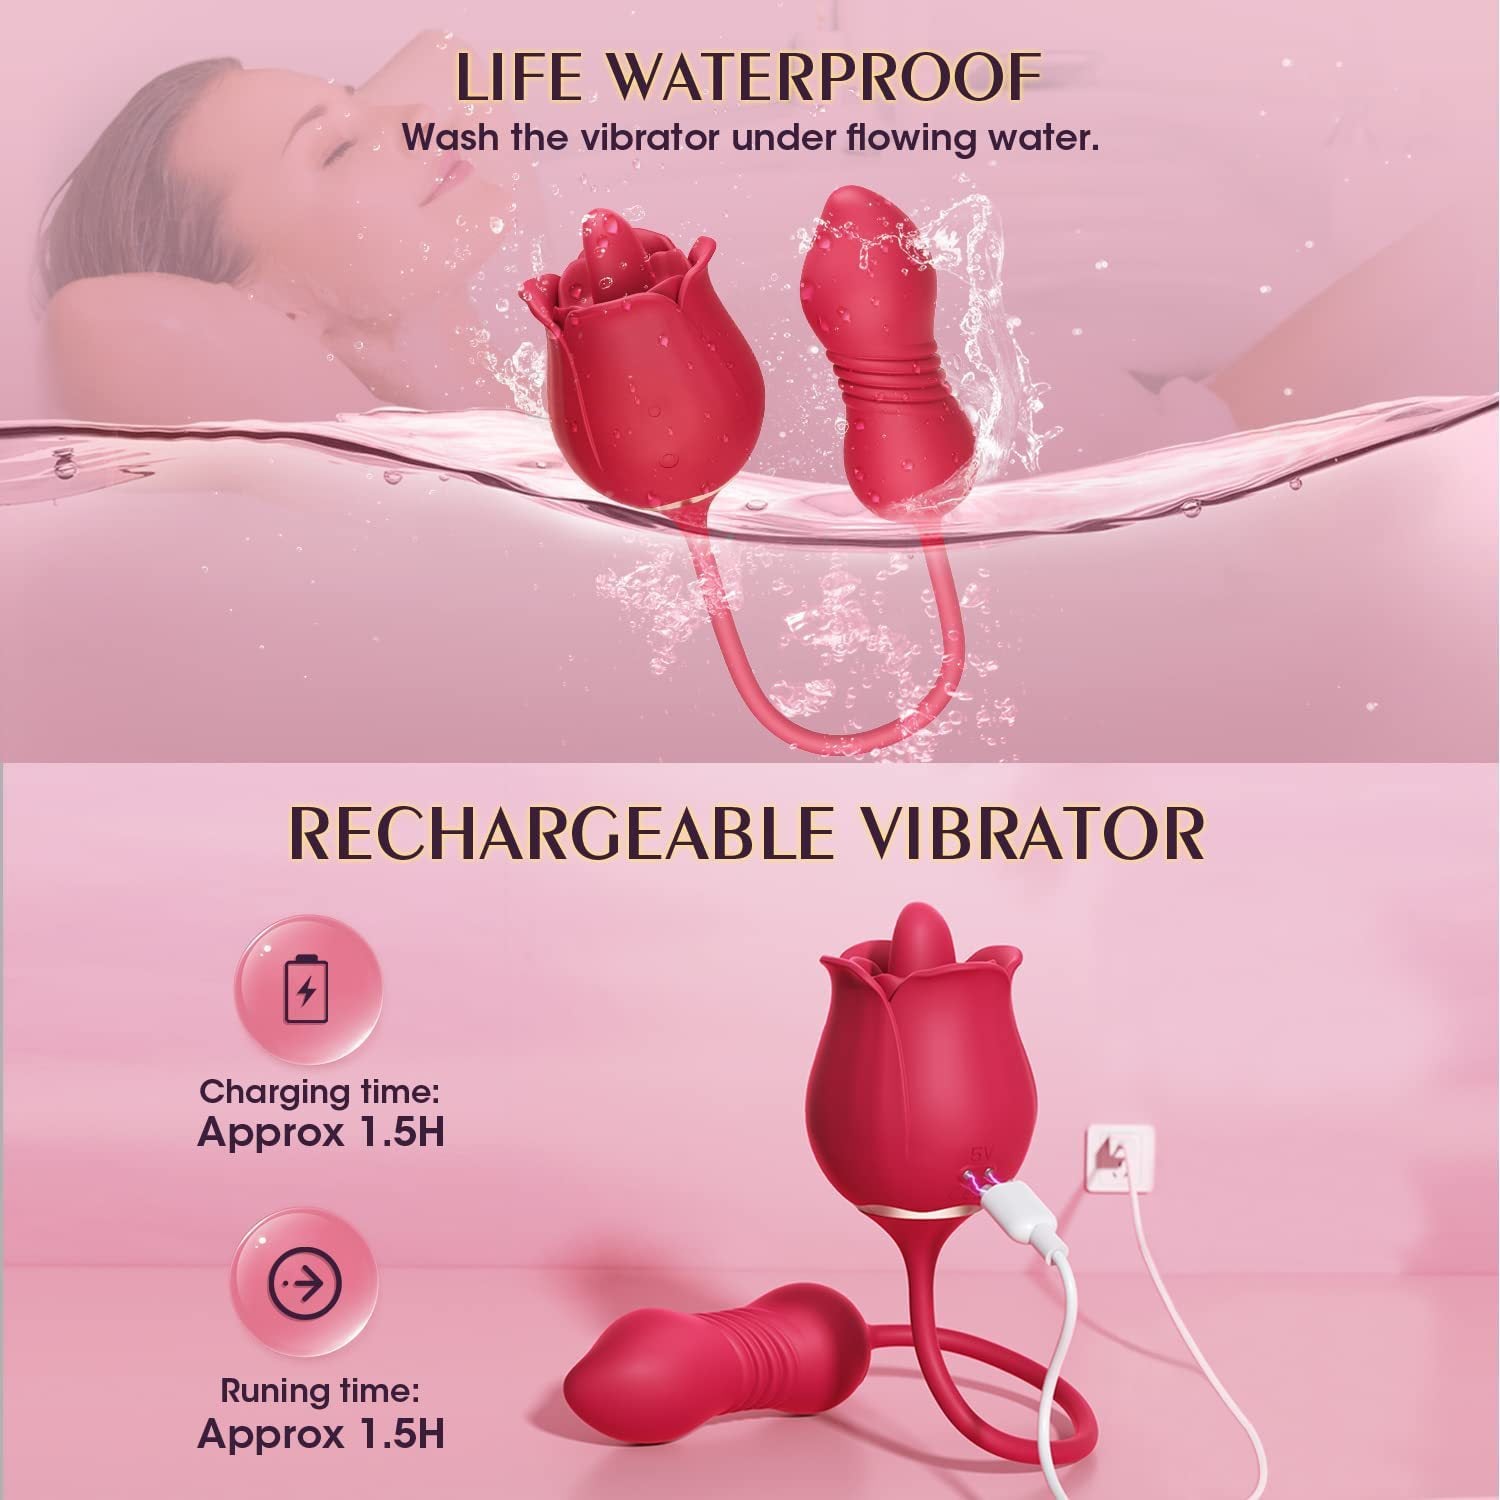 Rose Clit Licking Stimulator & Vibrating Egg